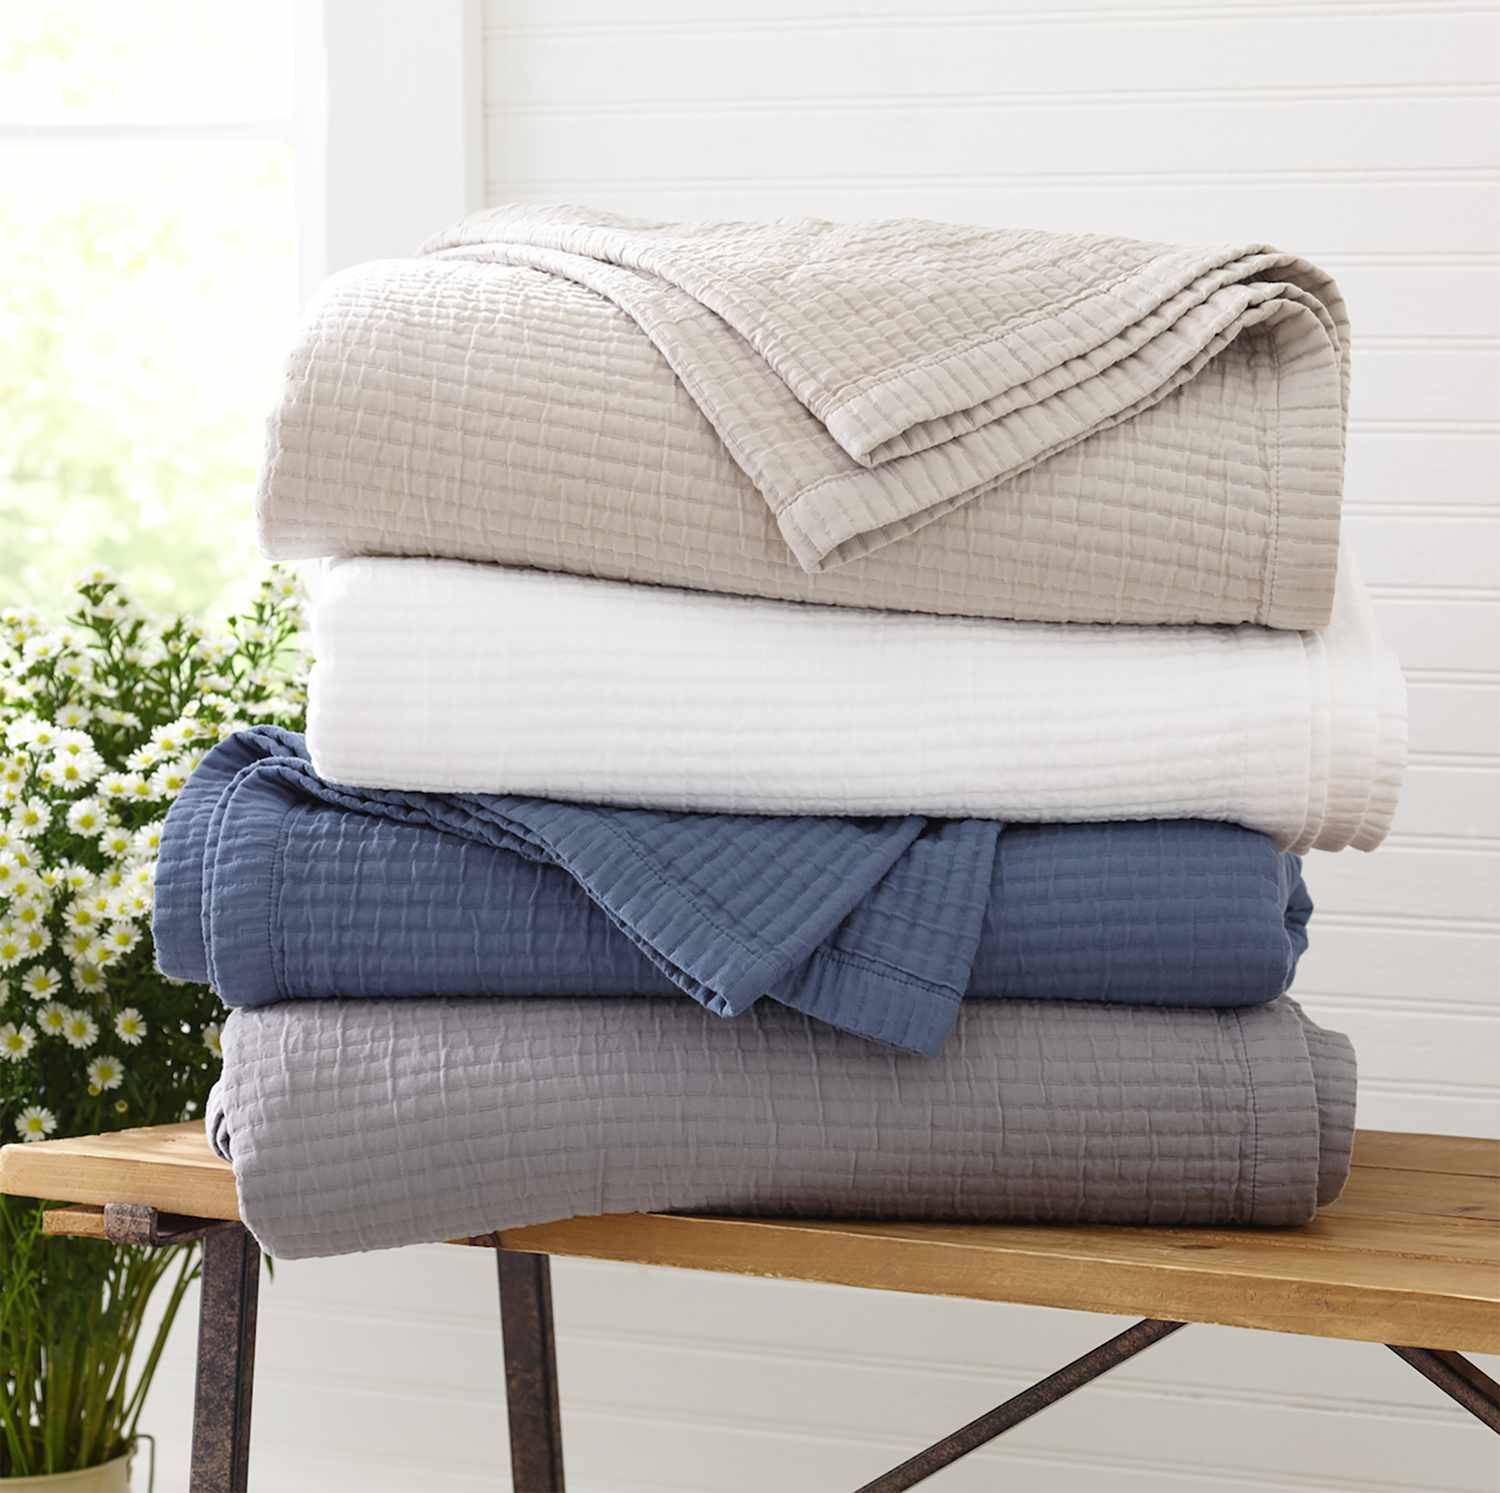 folded blankets stack